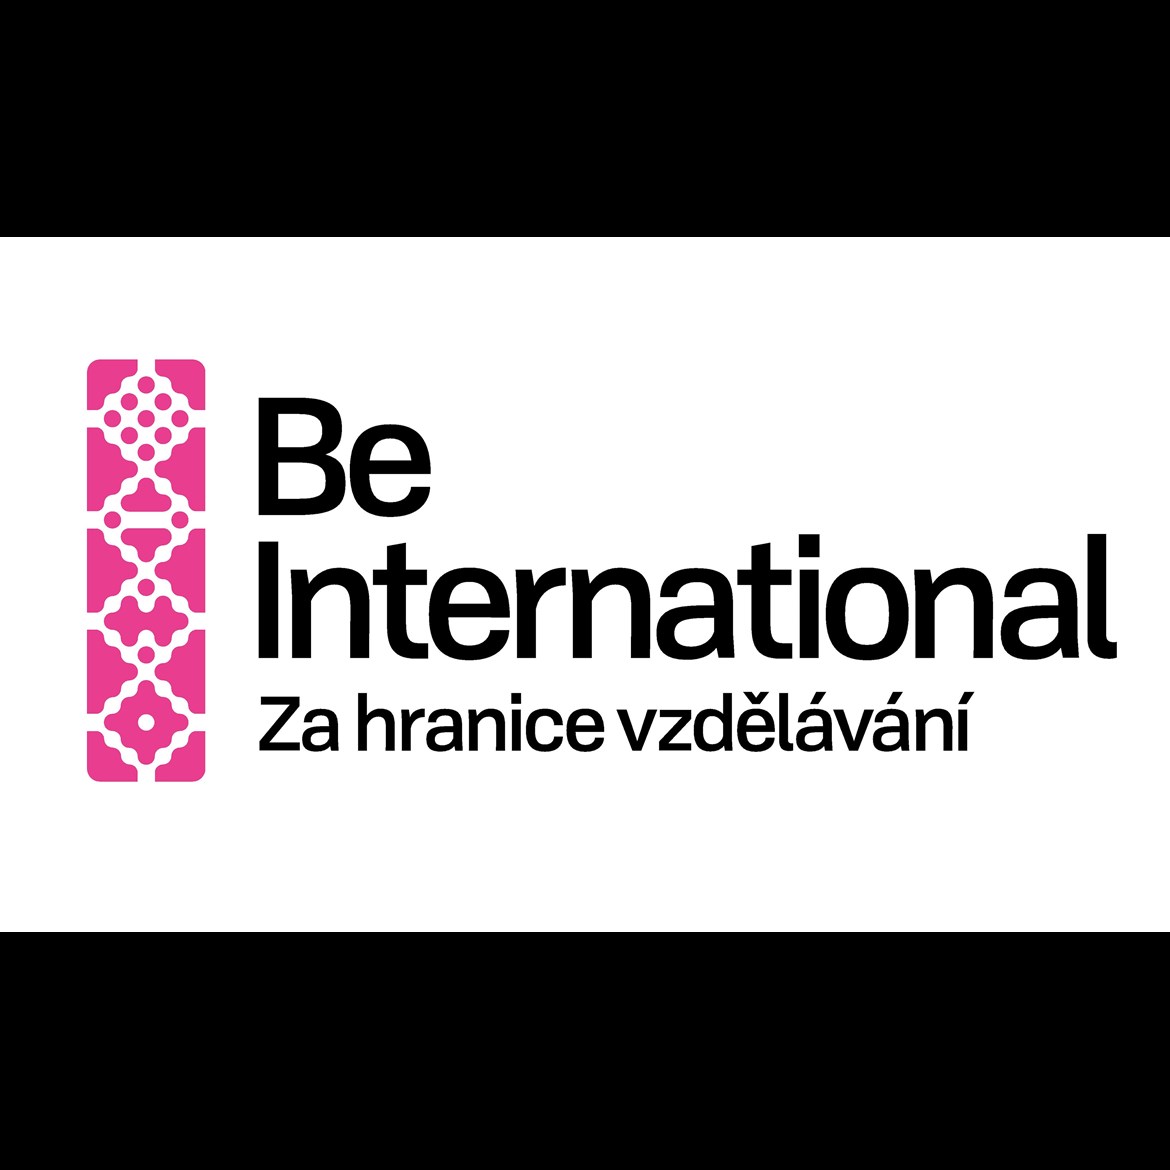 Be International